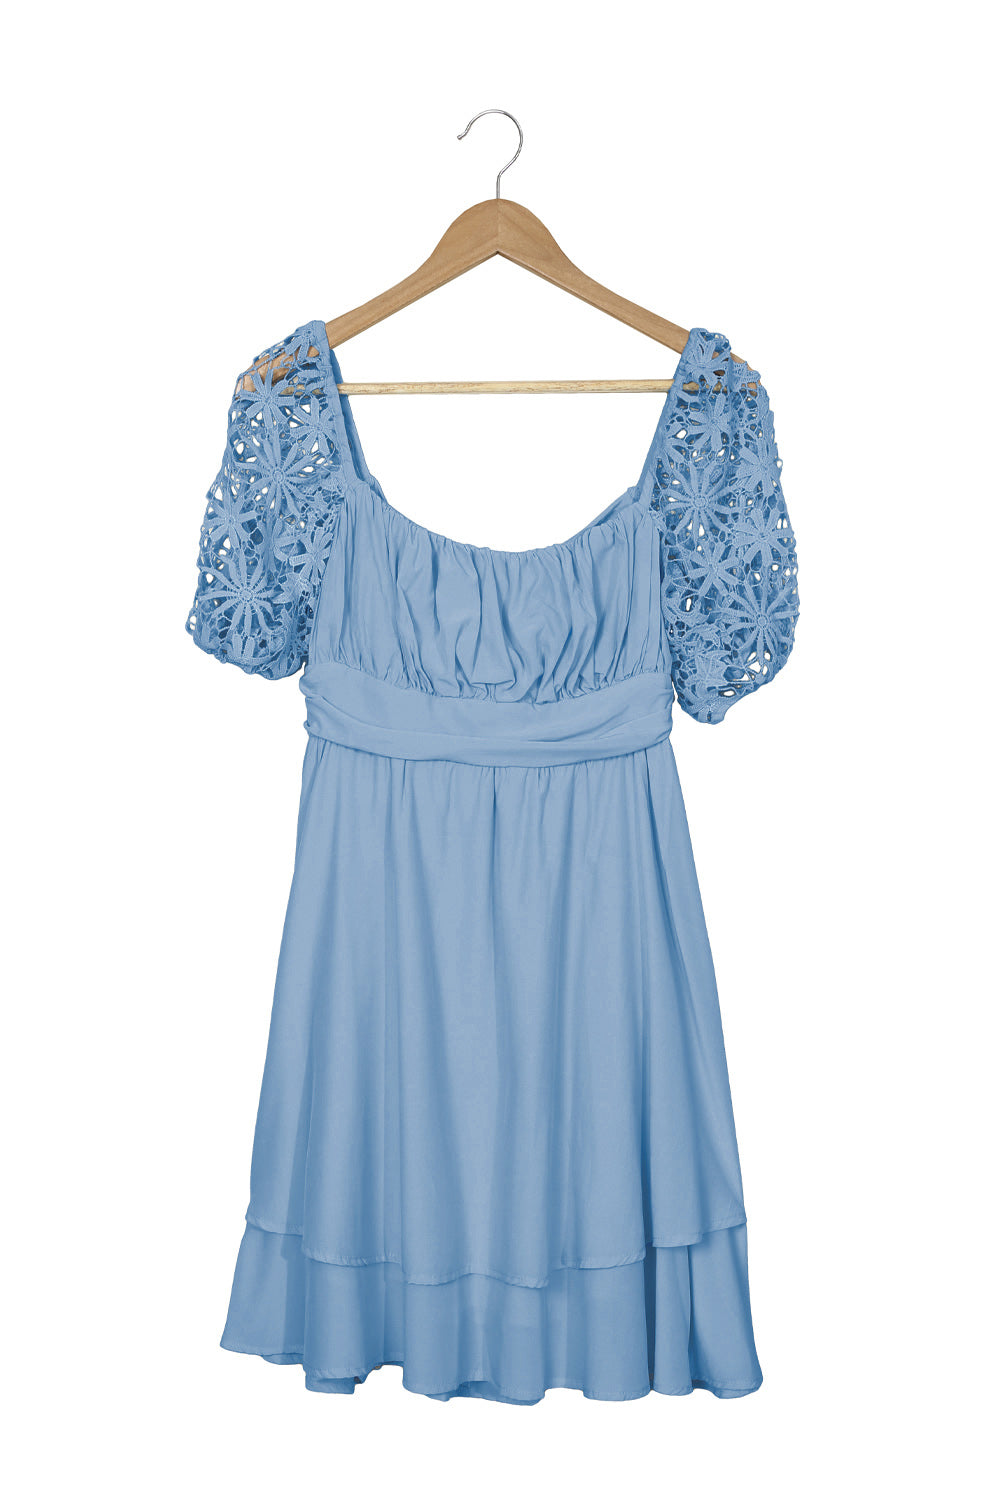 Sky Blue White Puff Sleeve Dress Square Neck Lace Ruffle A Line Mini Dress  LC2211141-4